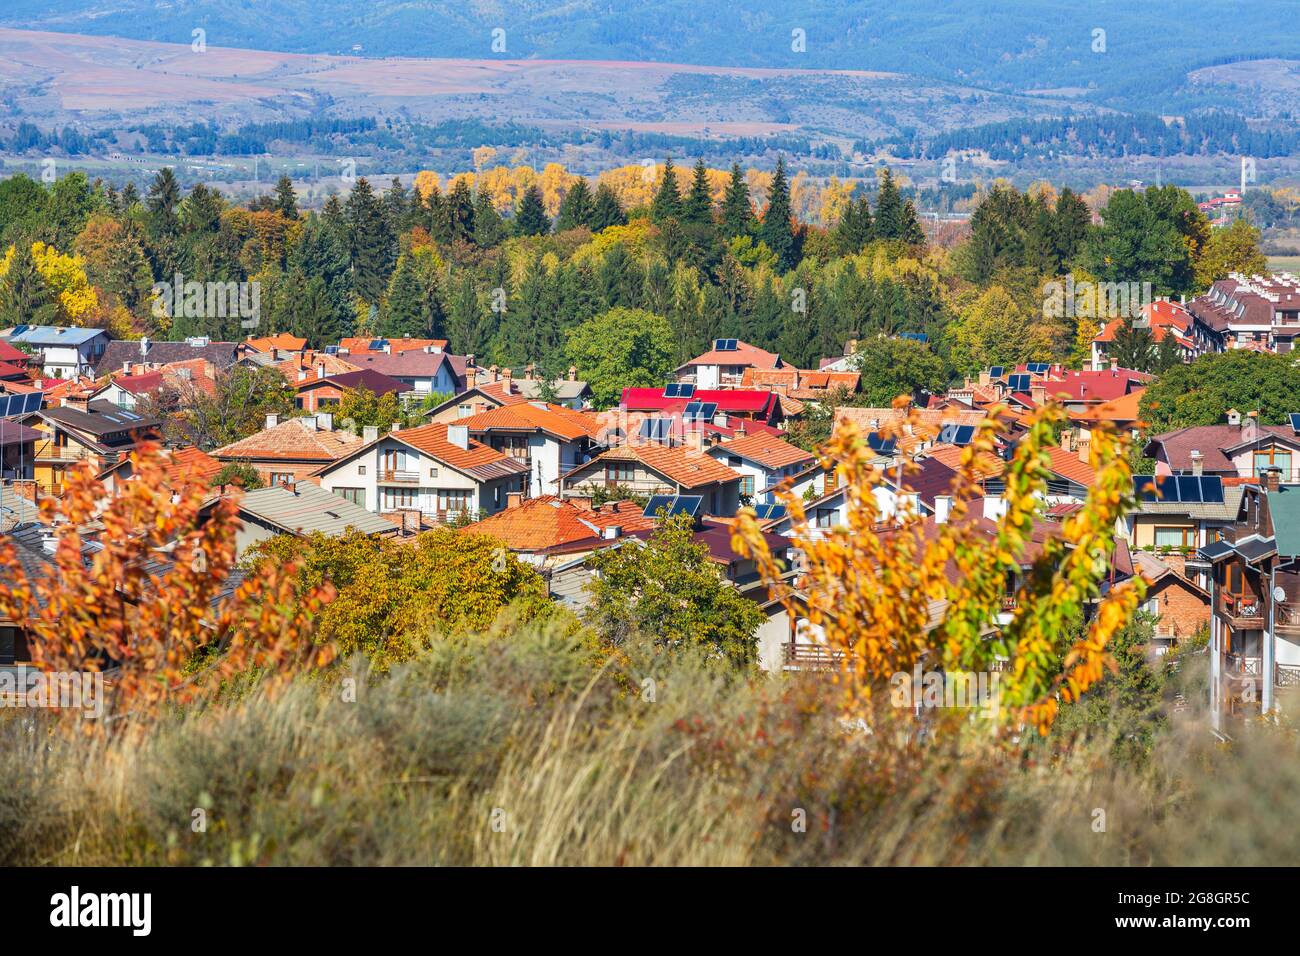 Bansko, Bulgarien Altstadt Luftpanorama mit Häusern und bunten Herbstbäumen Stockfoto